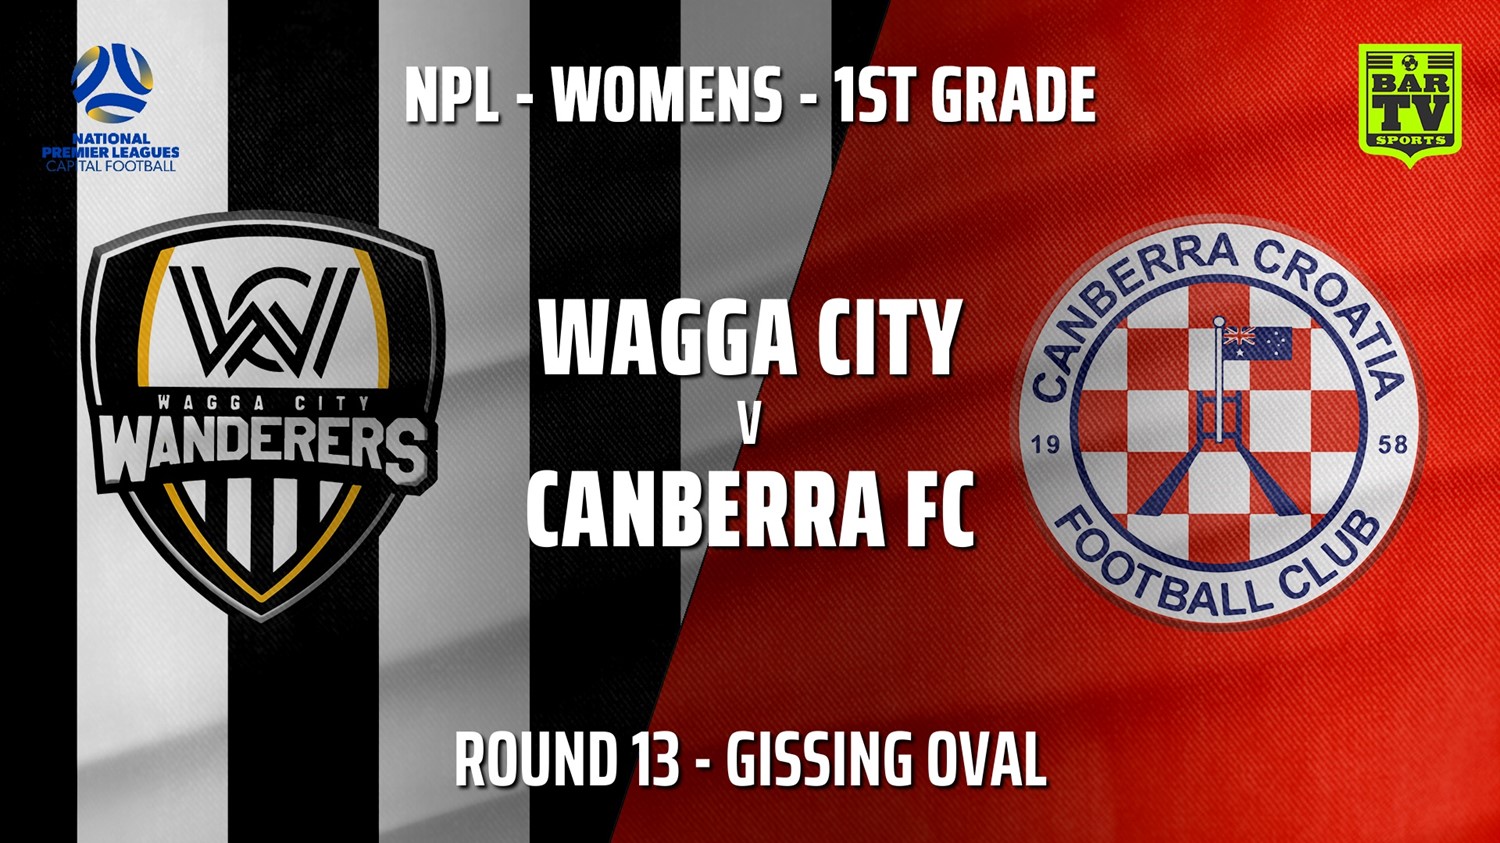 210711-Capital Womens Round 13 - Wagga City Wanderers FC (women) v Canberra FC (women) Minigame Slate Image